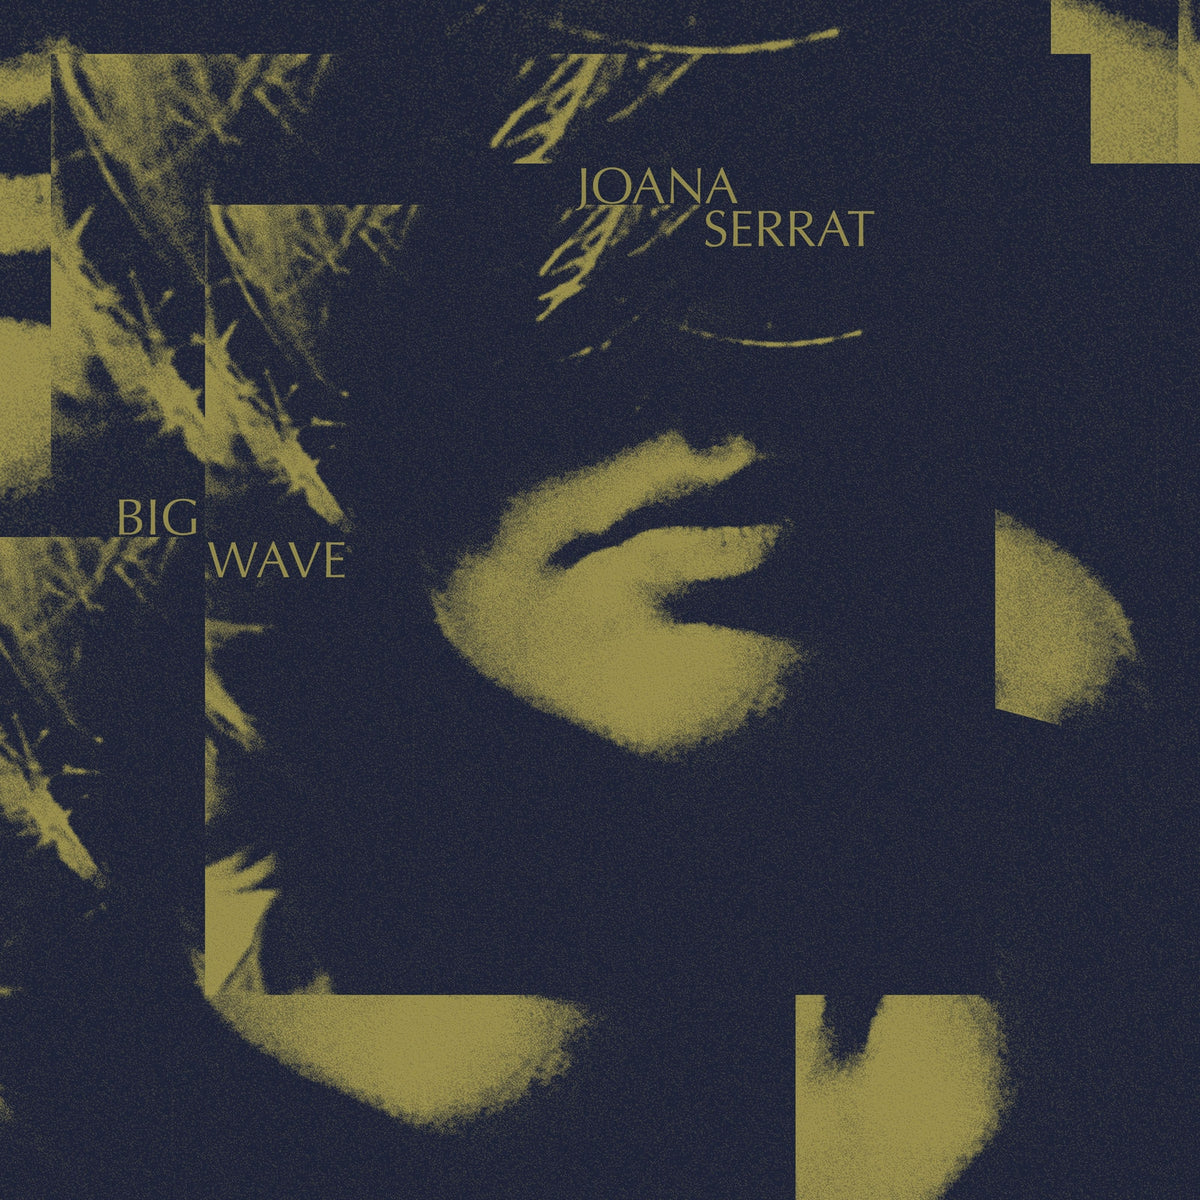 Big Wave by Joana Serrat on Goldrush Records